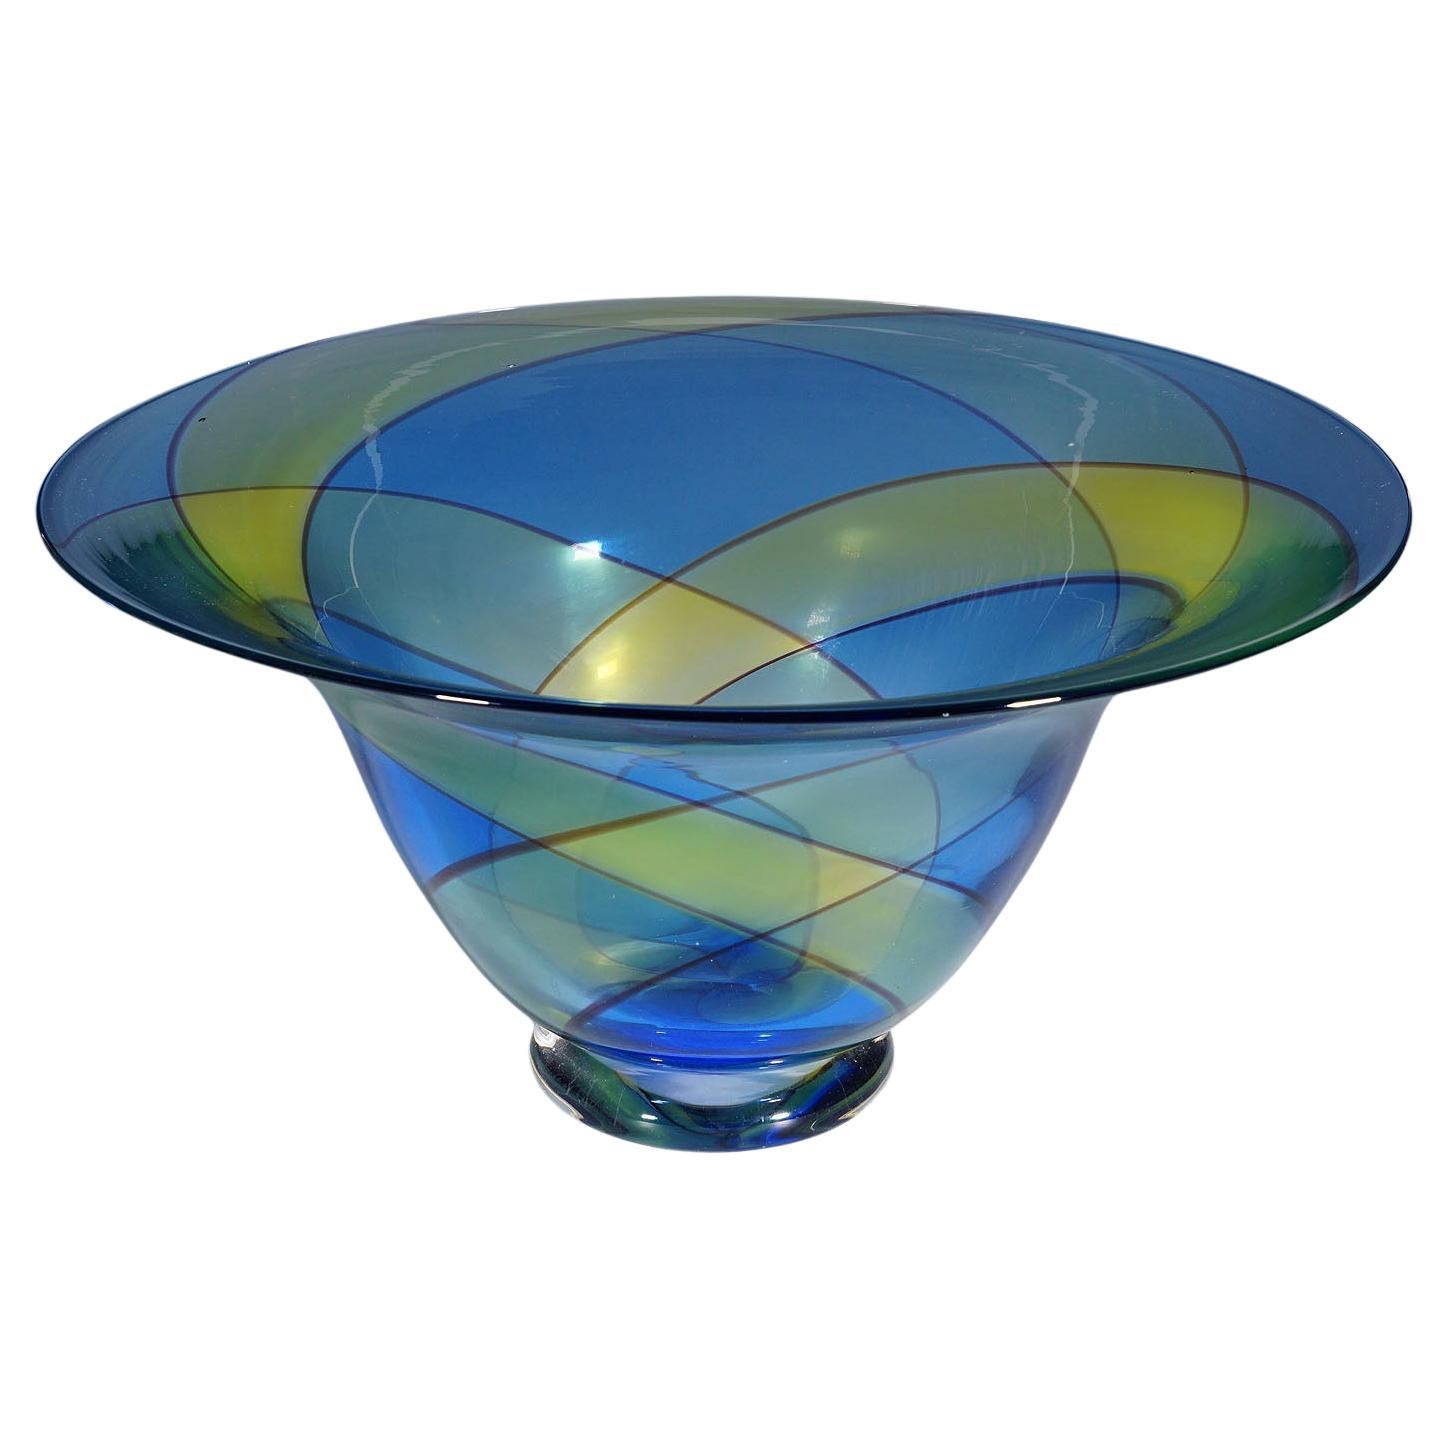 Large Carnevale Art Glass Bowl by Vetreria Archimede Seguso ca. 1980s For Sale